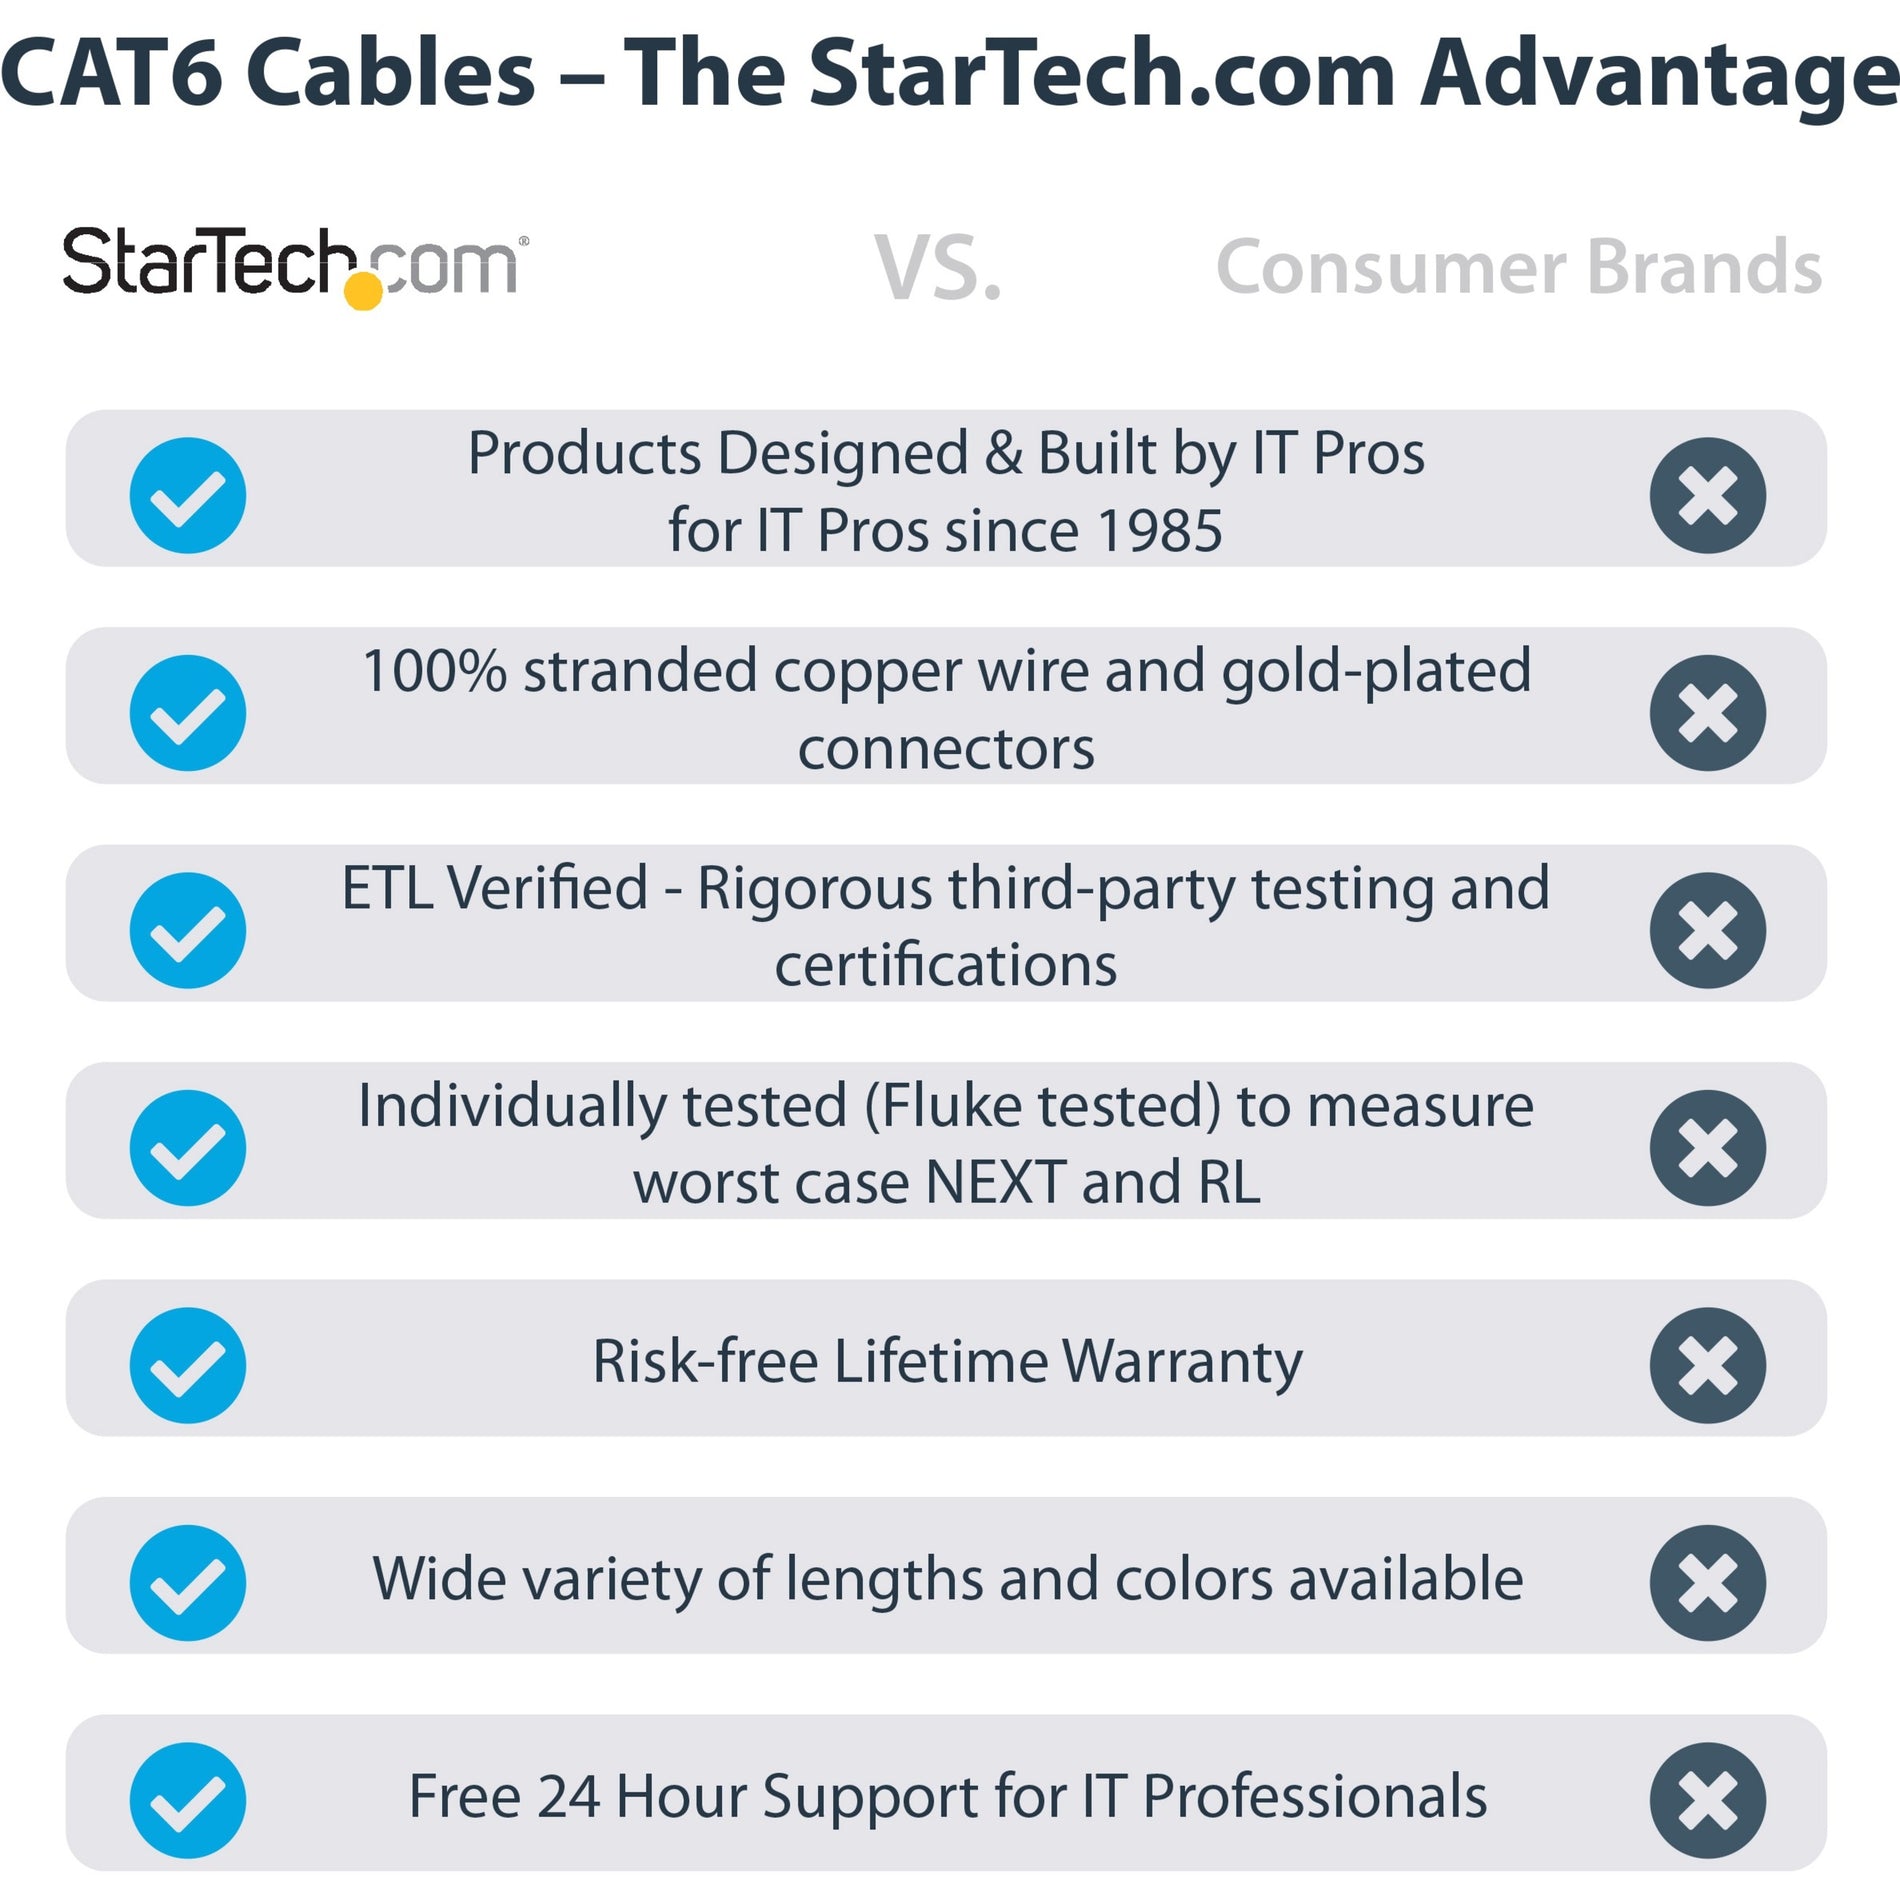 StarTech.com N6PATCH75BL 75 ft. Cat6 Patch Cable - Blue, Lifetime Warranty, Snagless, 10 Gbit/s Data Transfer Rate